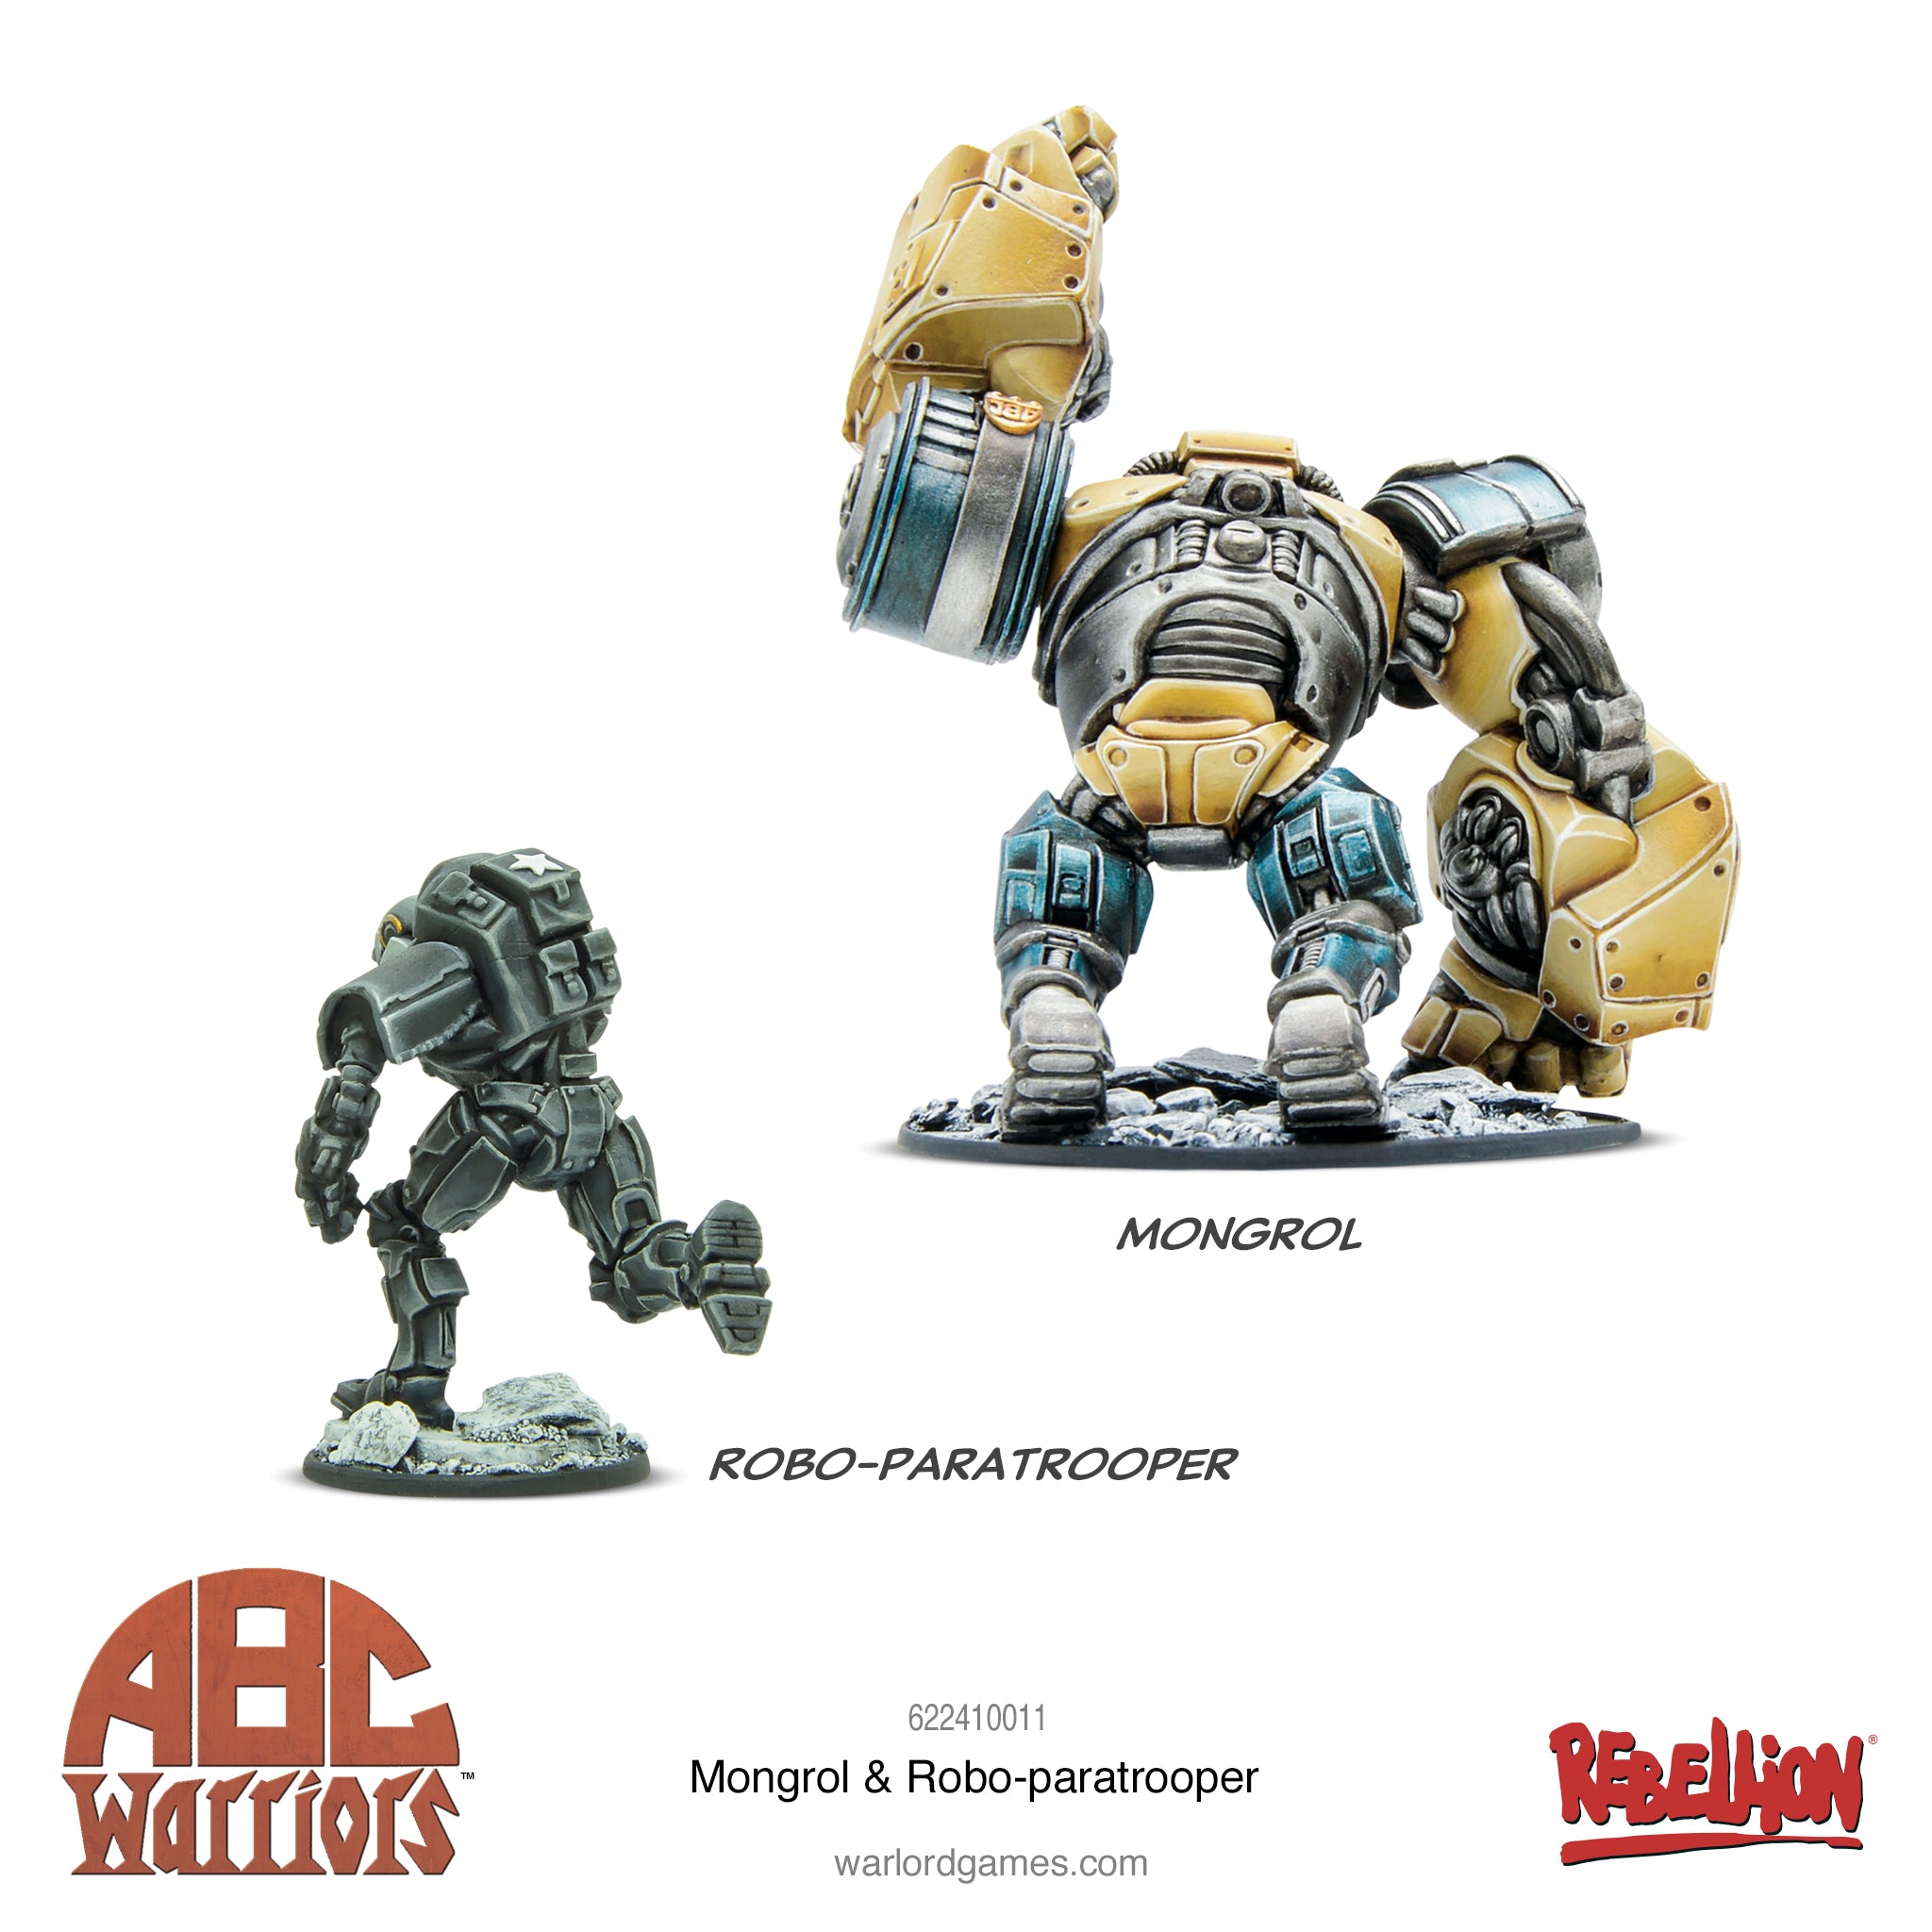 ABC Warriors: Mongrol & Robo-paratrooper